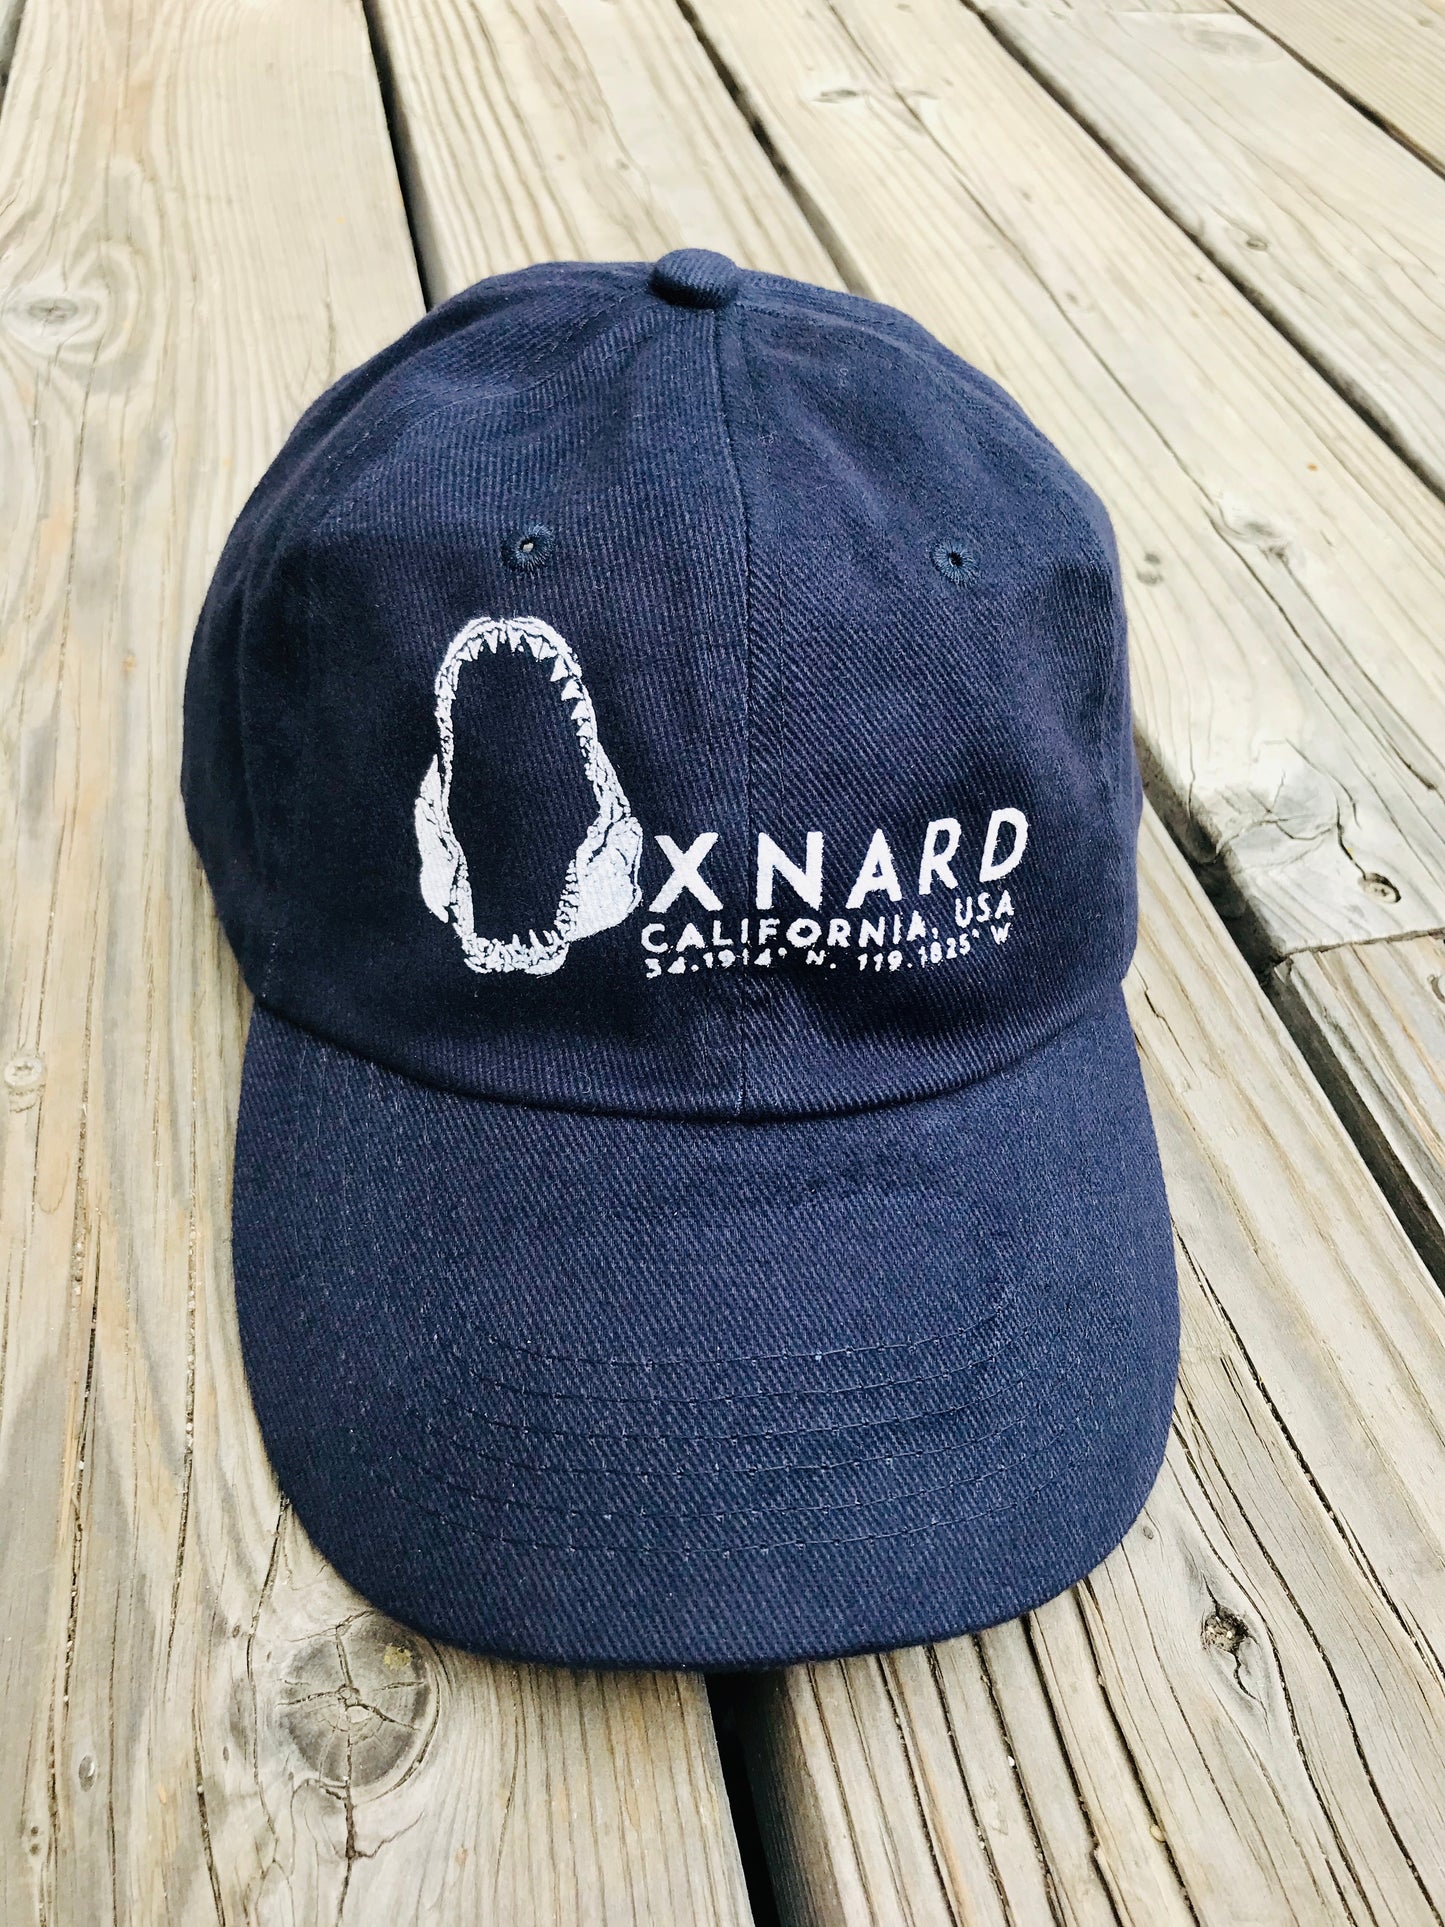 Oxnard soft cotton baseball cap